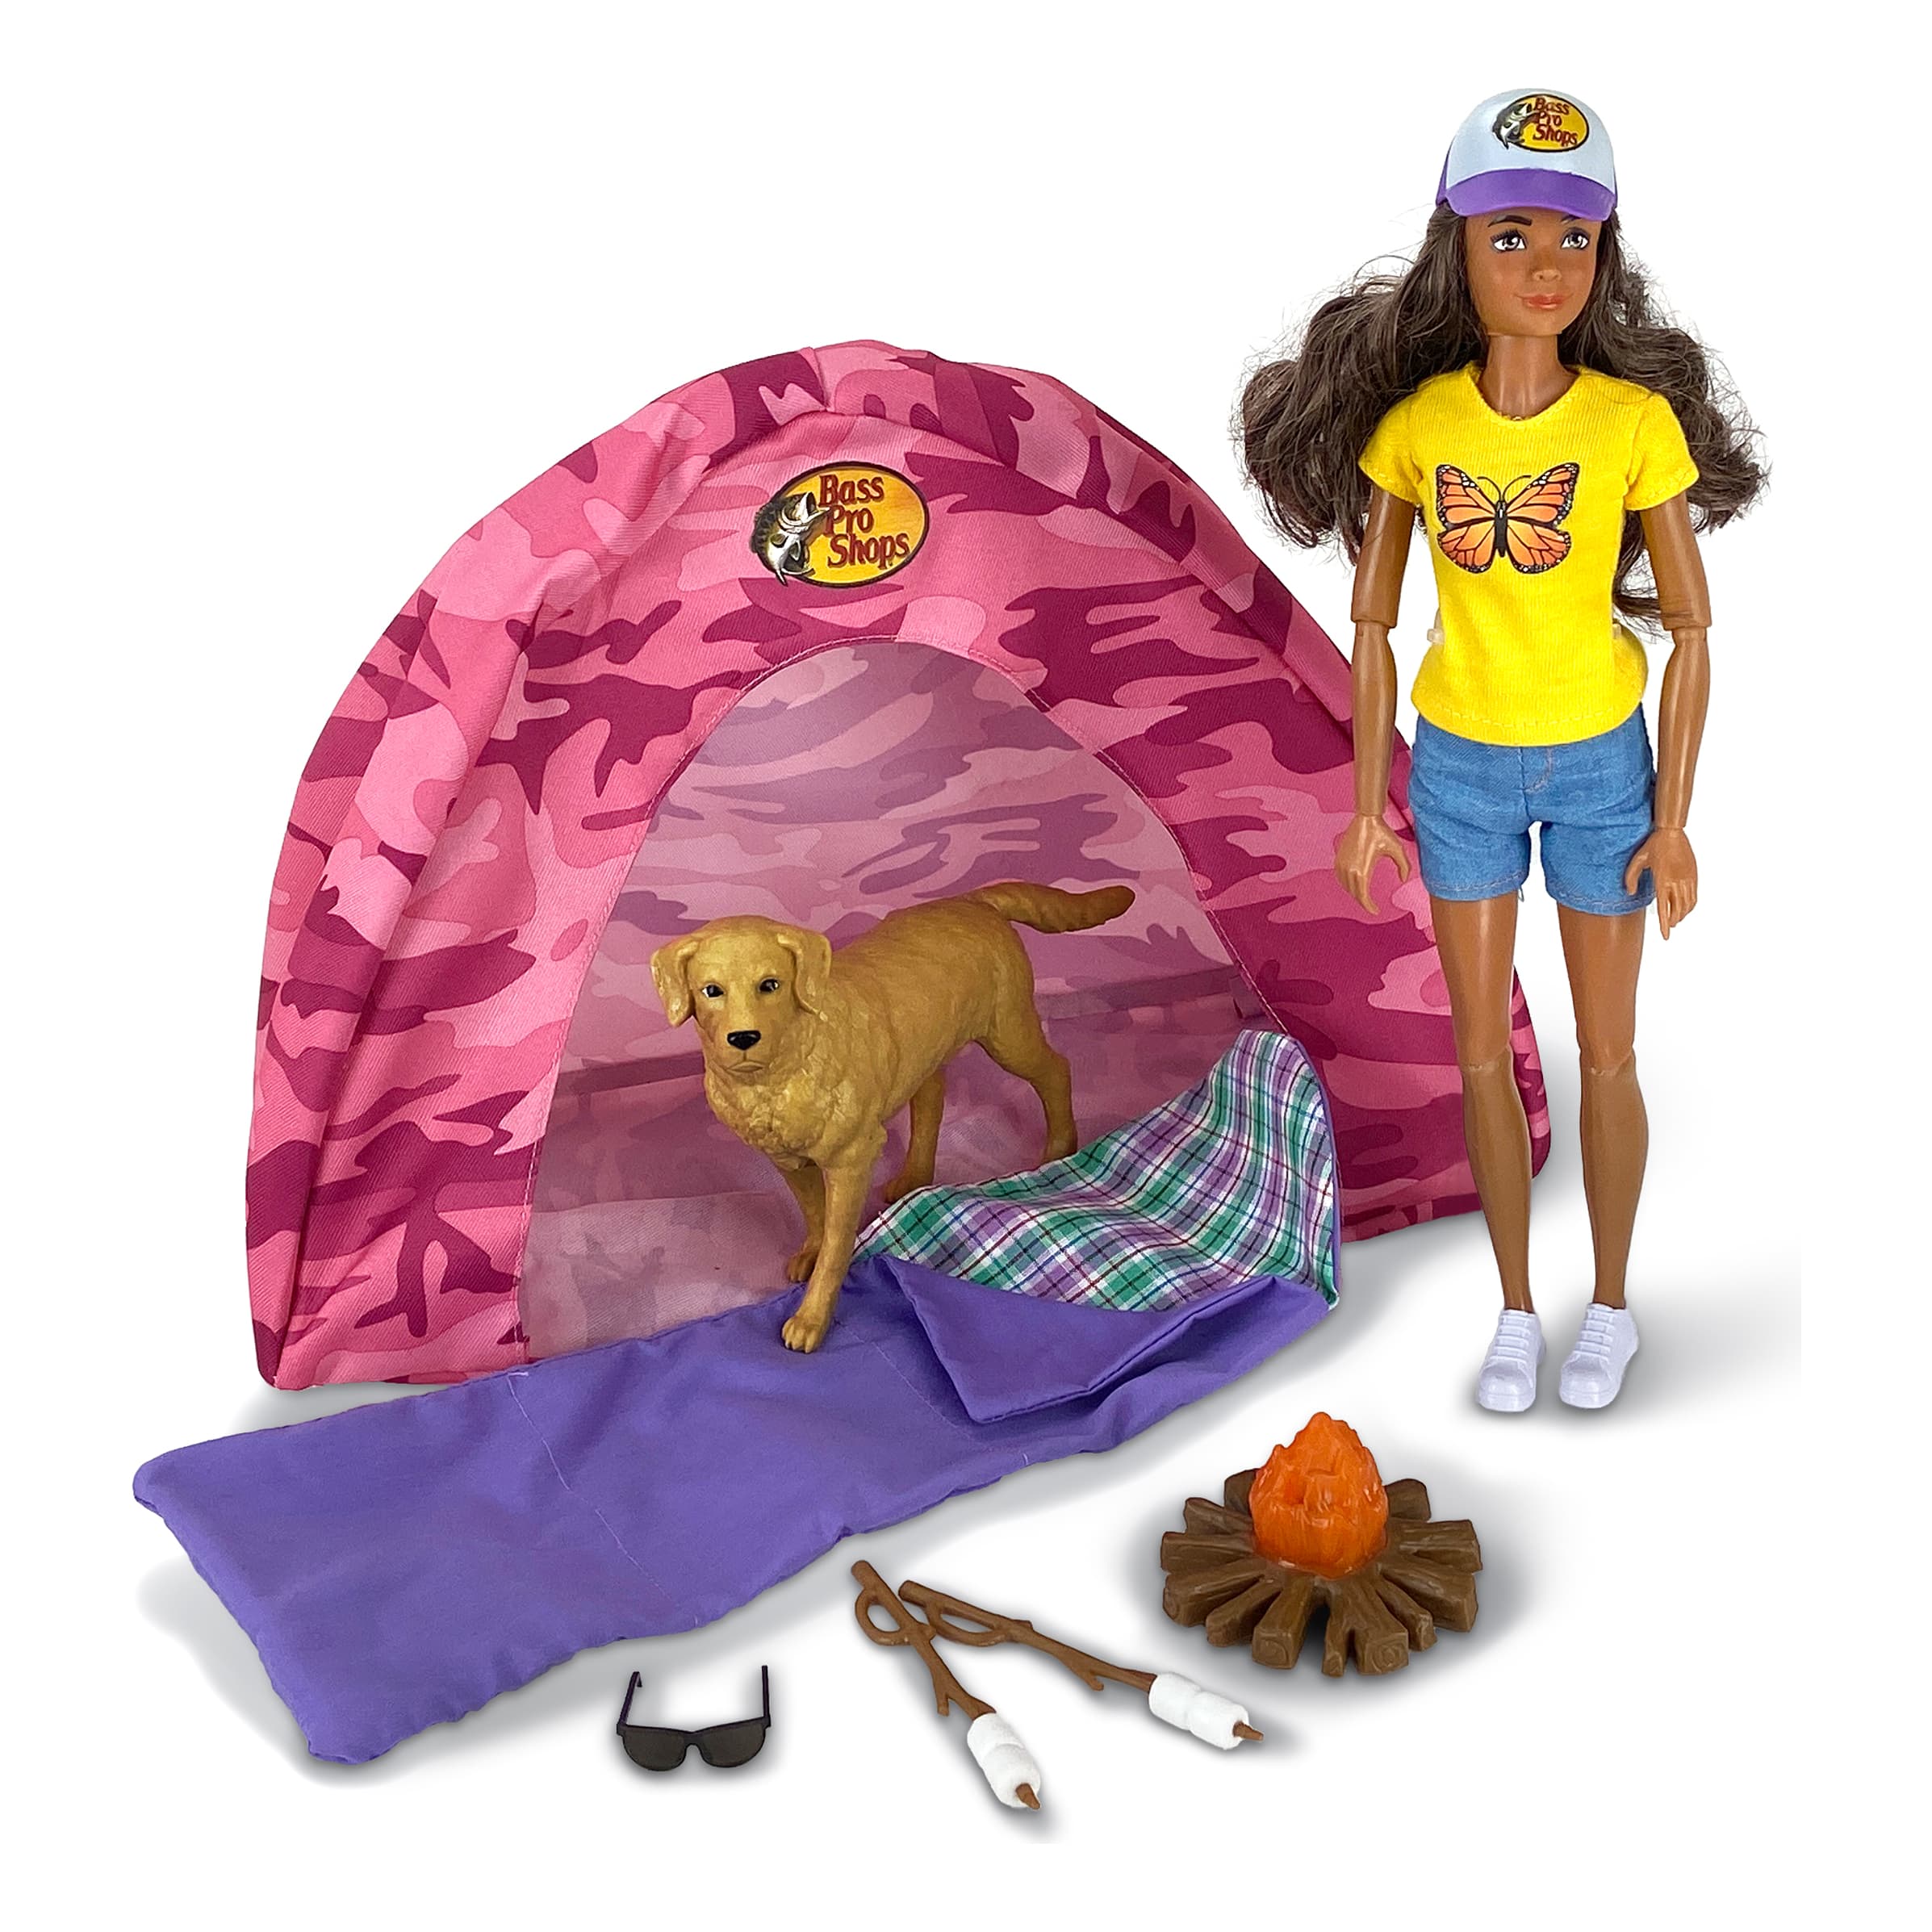 Bass Pro Shops® Doll Set - Camping